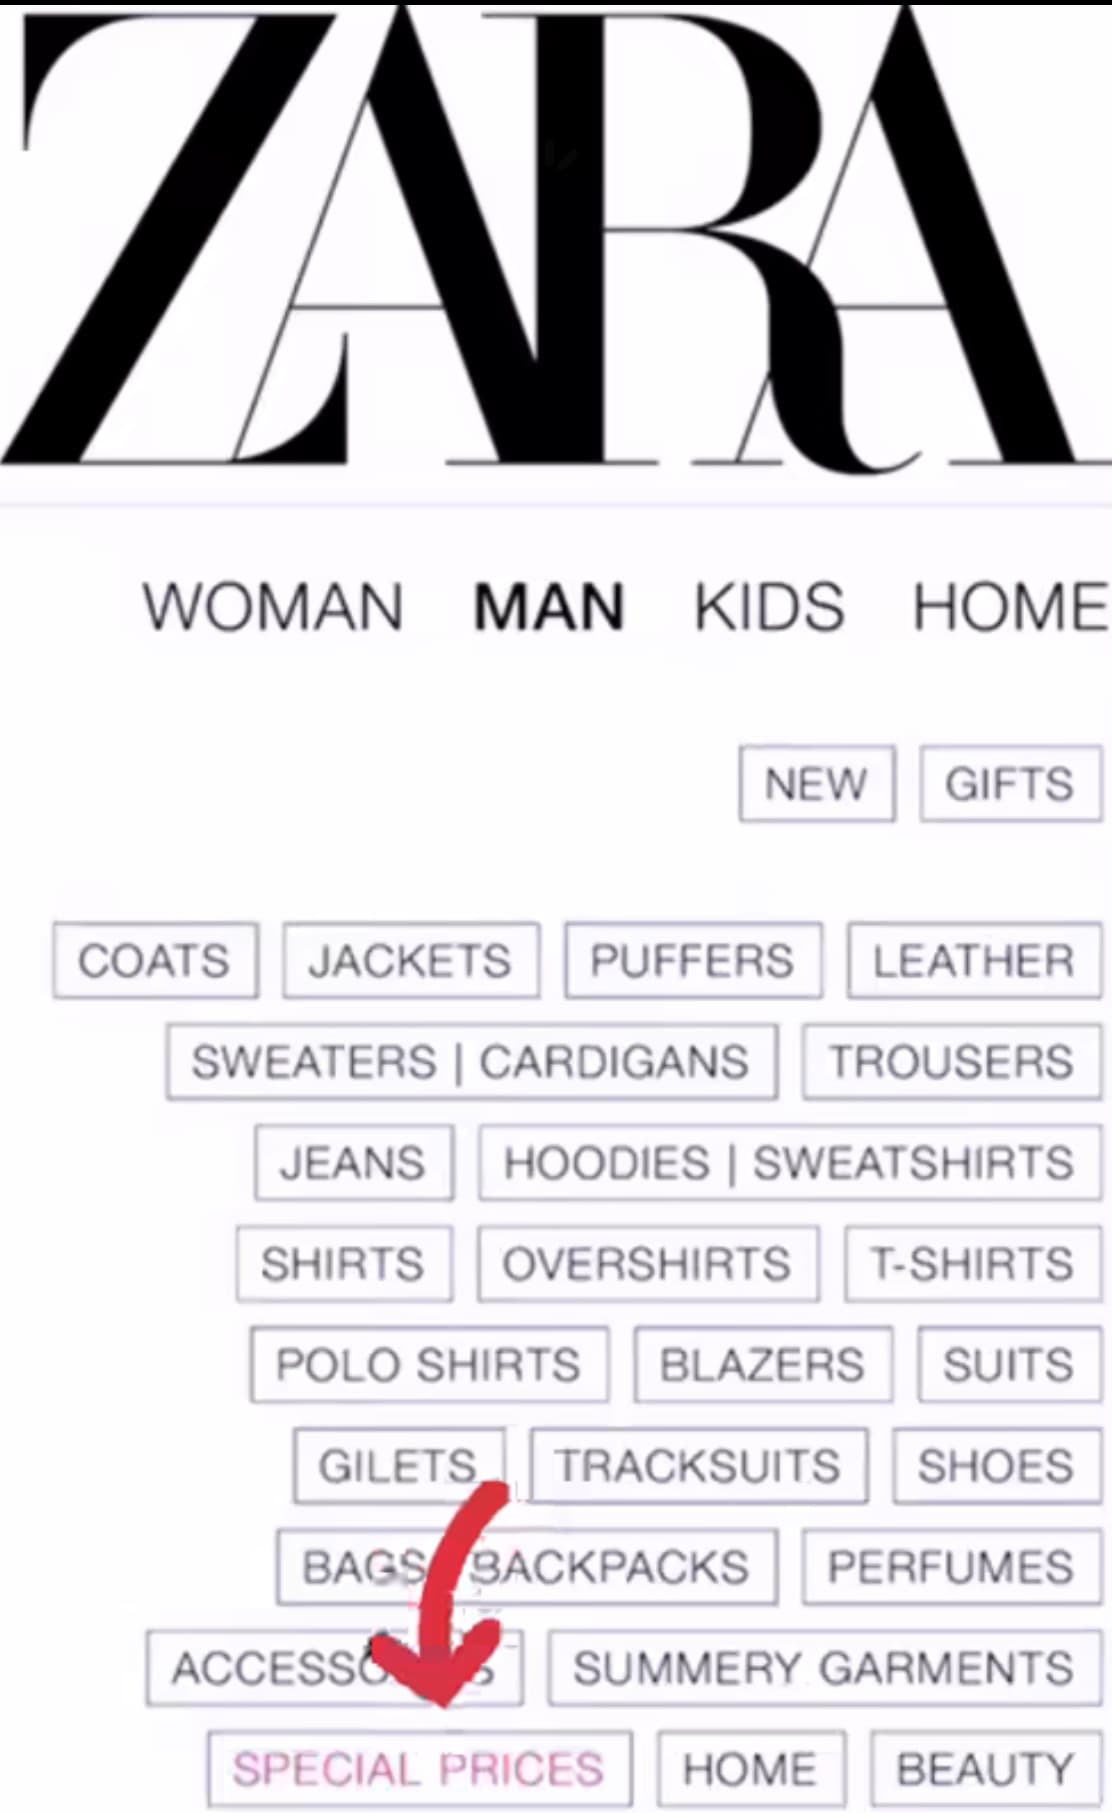 Refer to the Zara store website